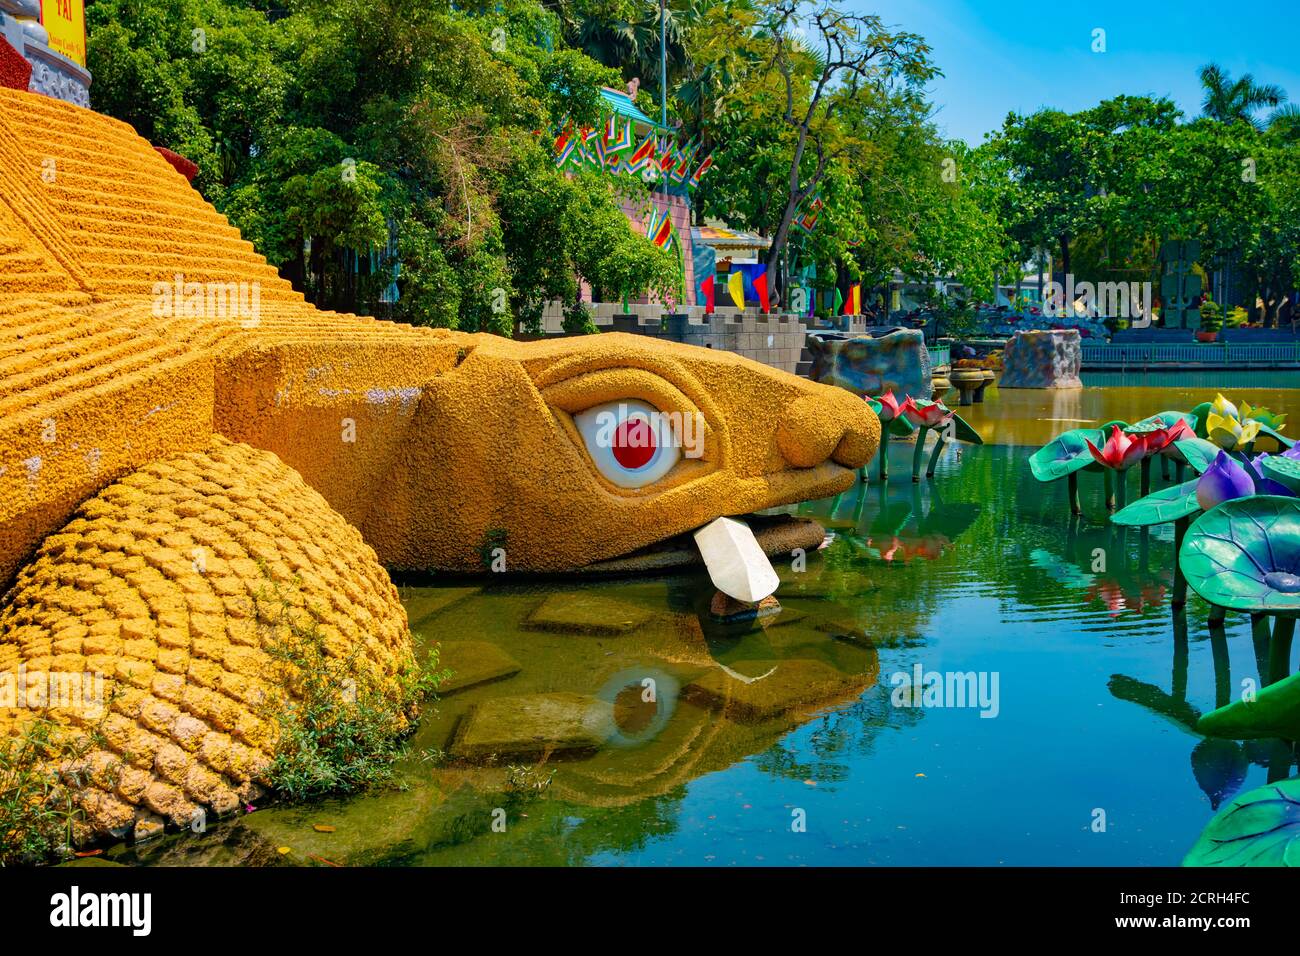 A Statue Turtle At Suoi Tien Park In Ho Chi Minh Vietnam Stock Photo - Alamy